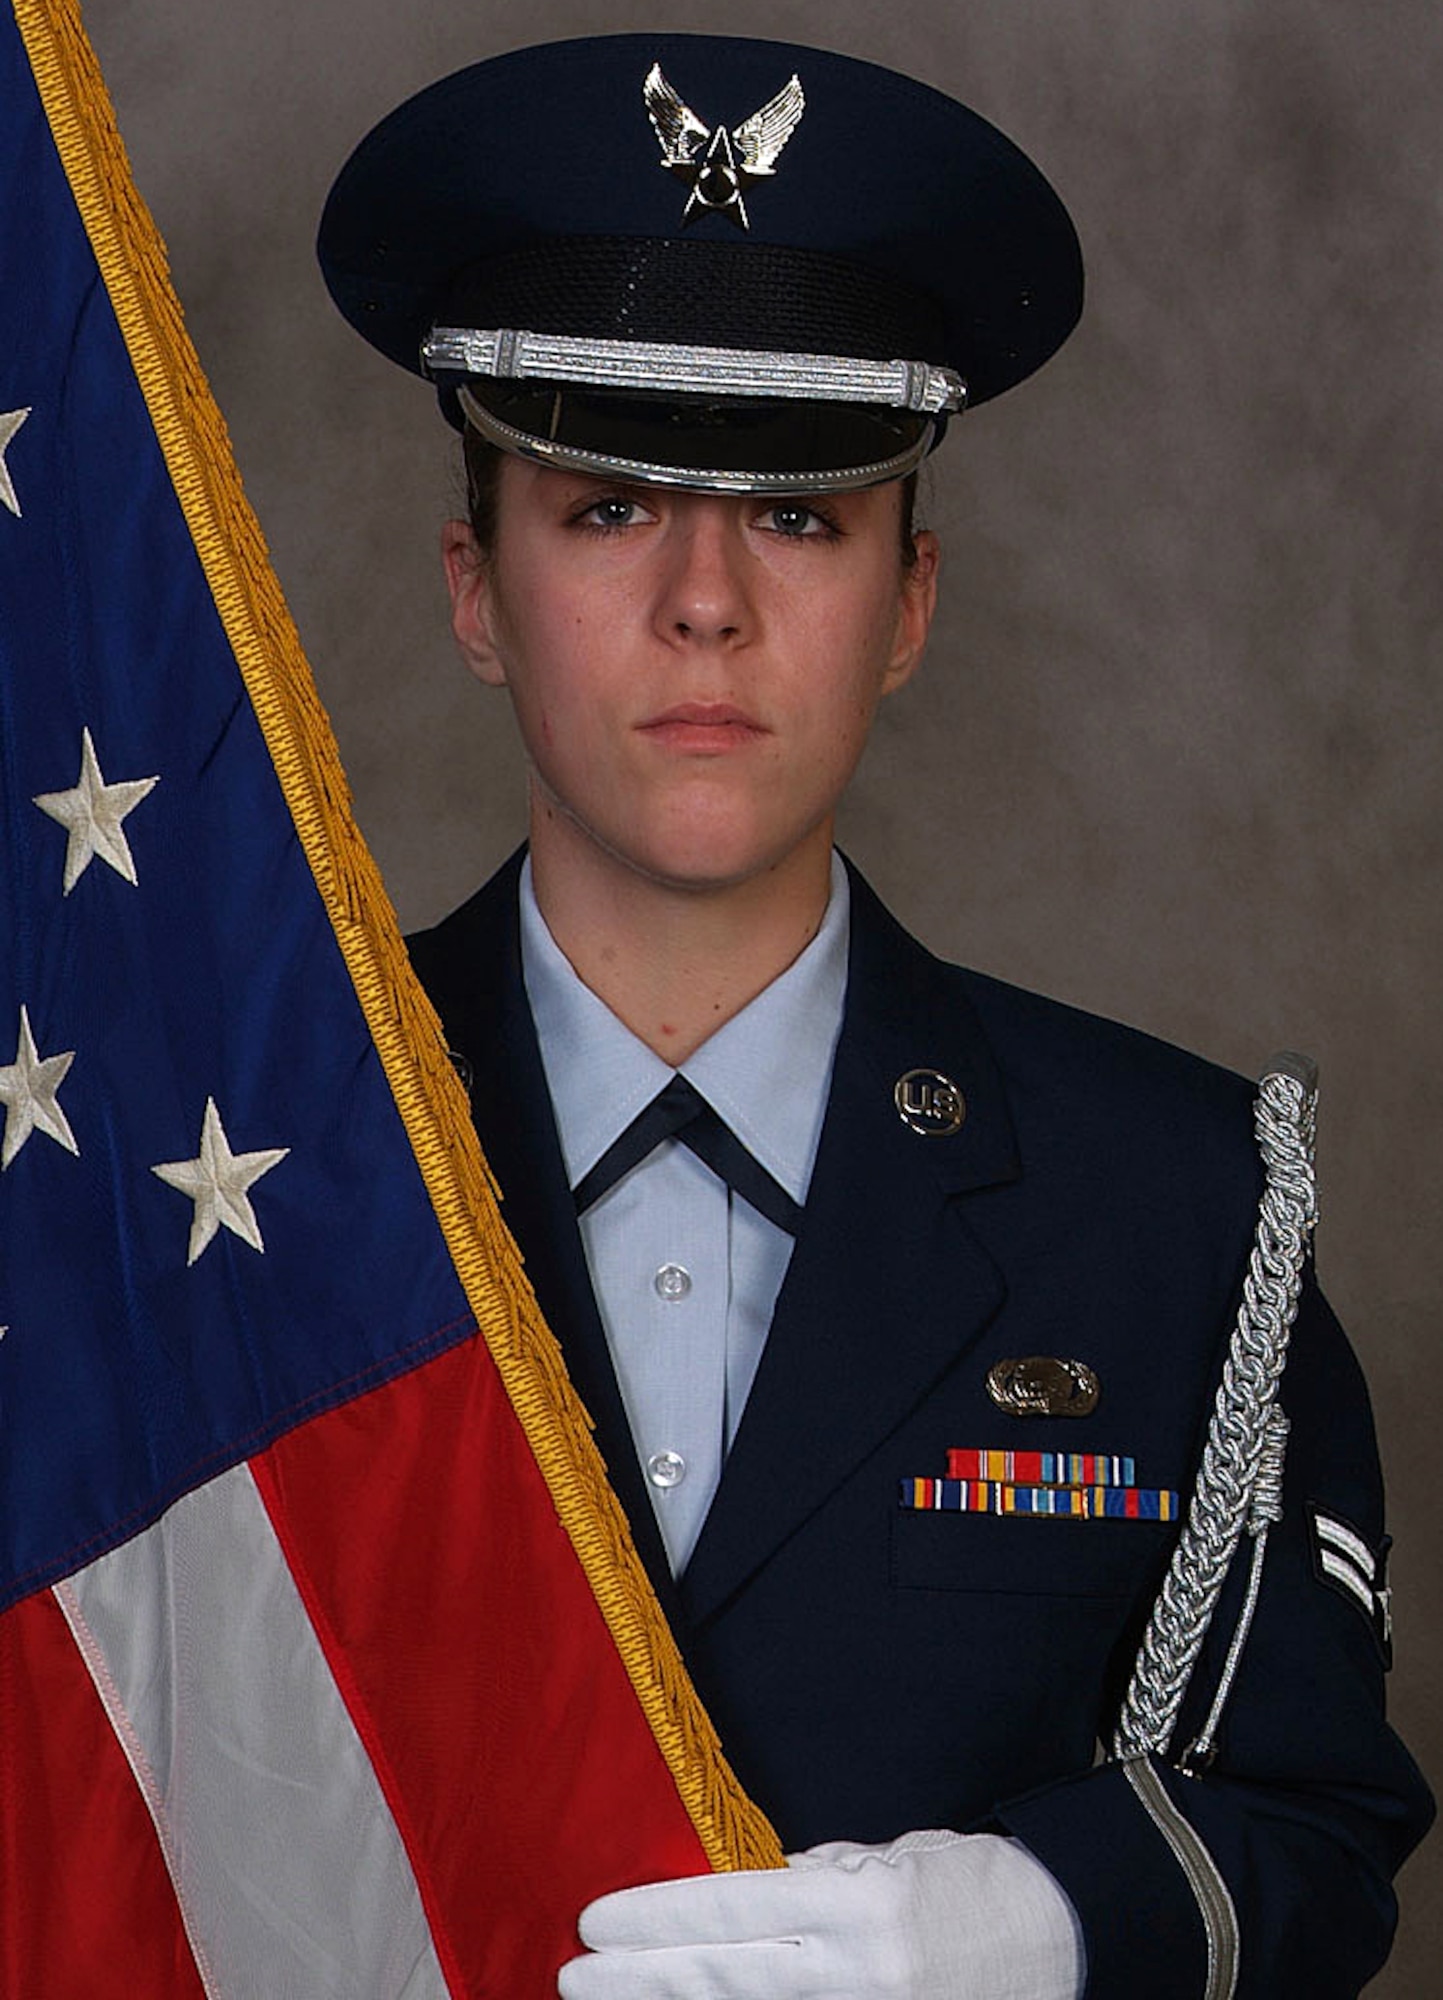 Airman 1st Class Jennifer Byrge